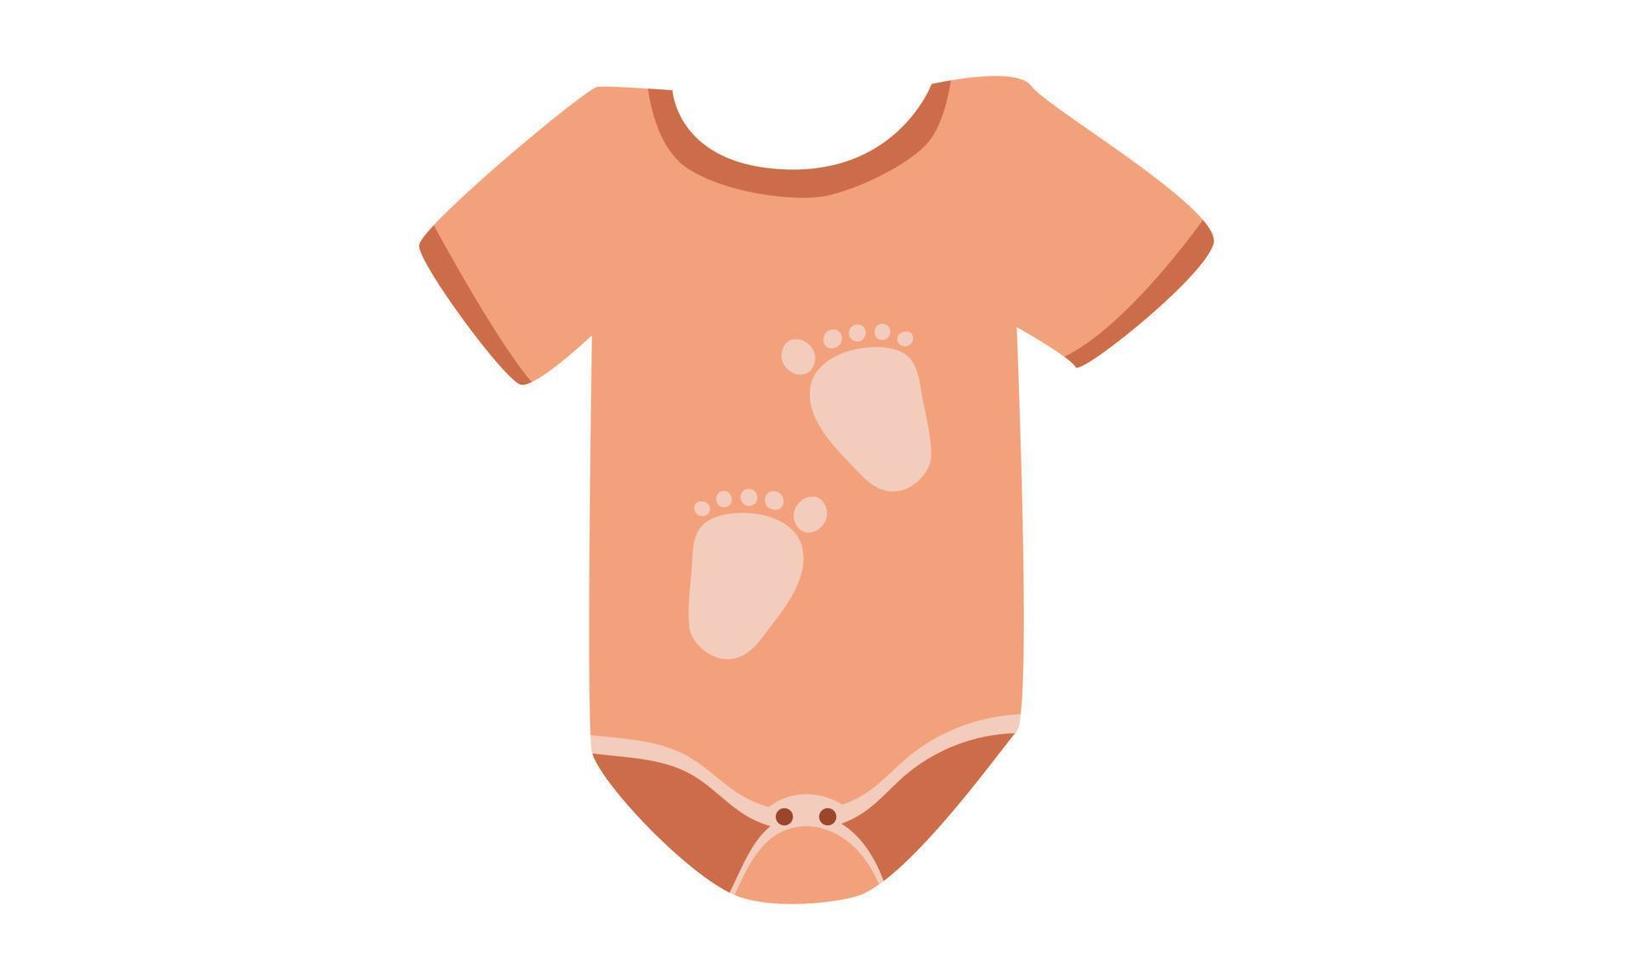 Orange baby onesie clipart. Simple cute baby onesie with footprint design flat vector illustration. Baby bodysuit, body children, baby shirt, romper, clothes for newborns cartoon drawing